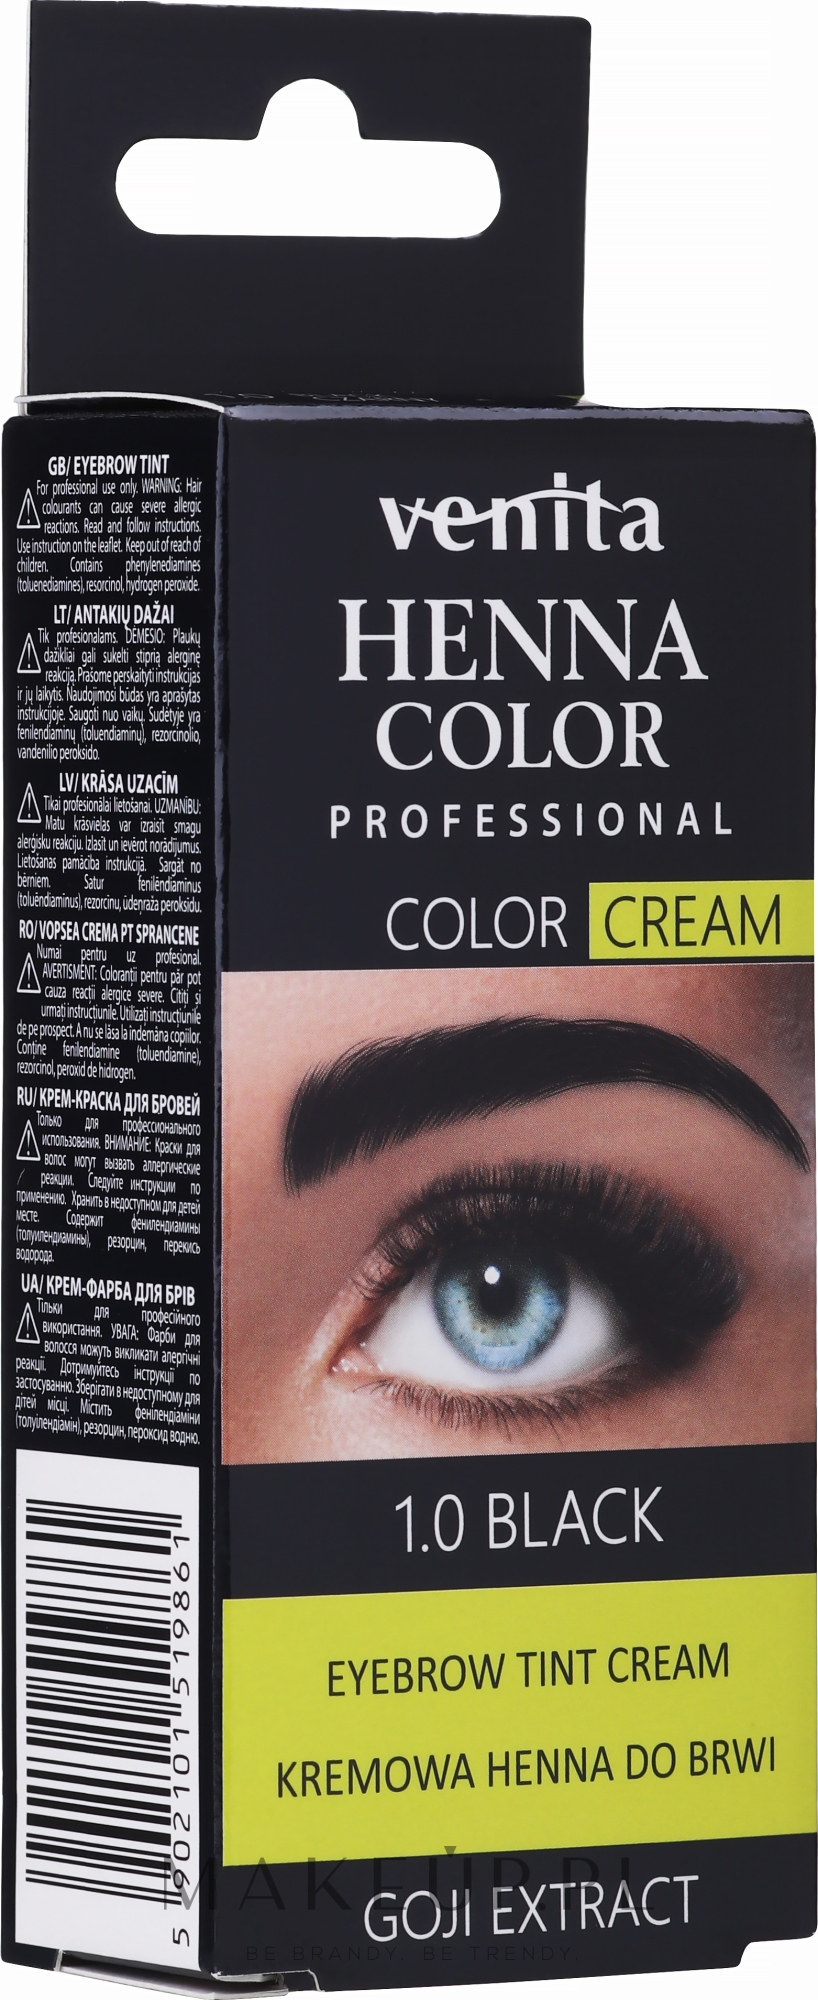 Kremowa henna do brwi - Venita Professional Henna Color Cream Eyebrow Tint Cream Goji Extract — Zdjęcie 1.0 - Black